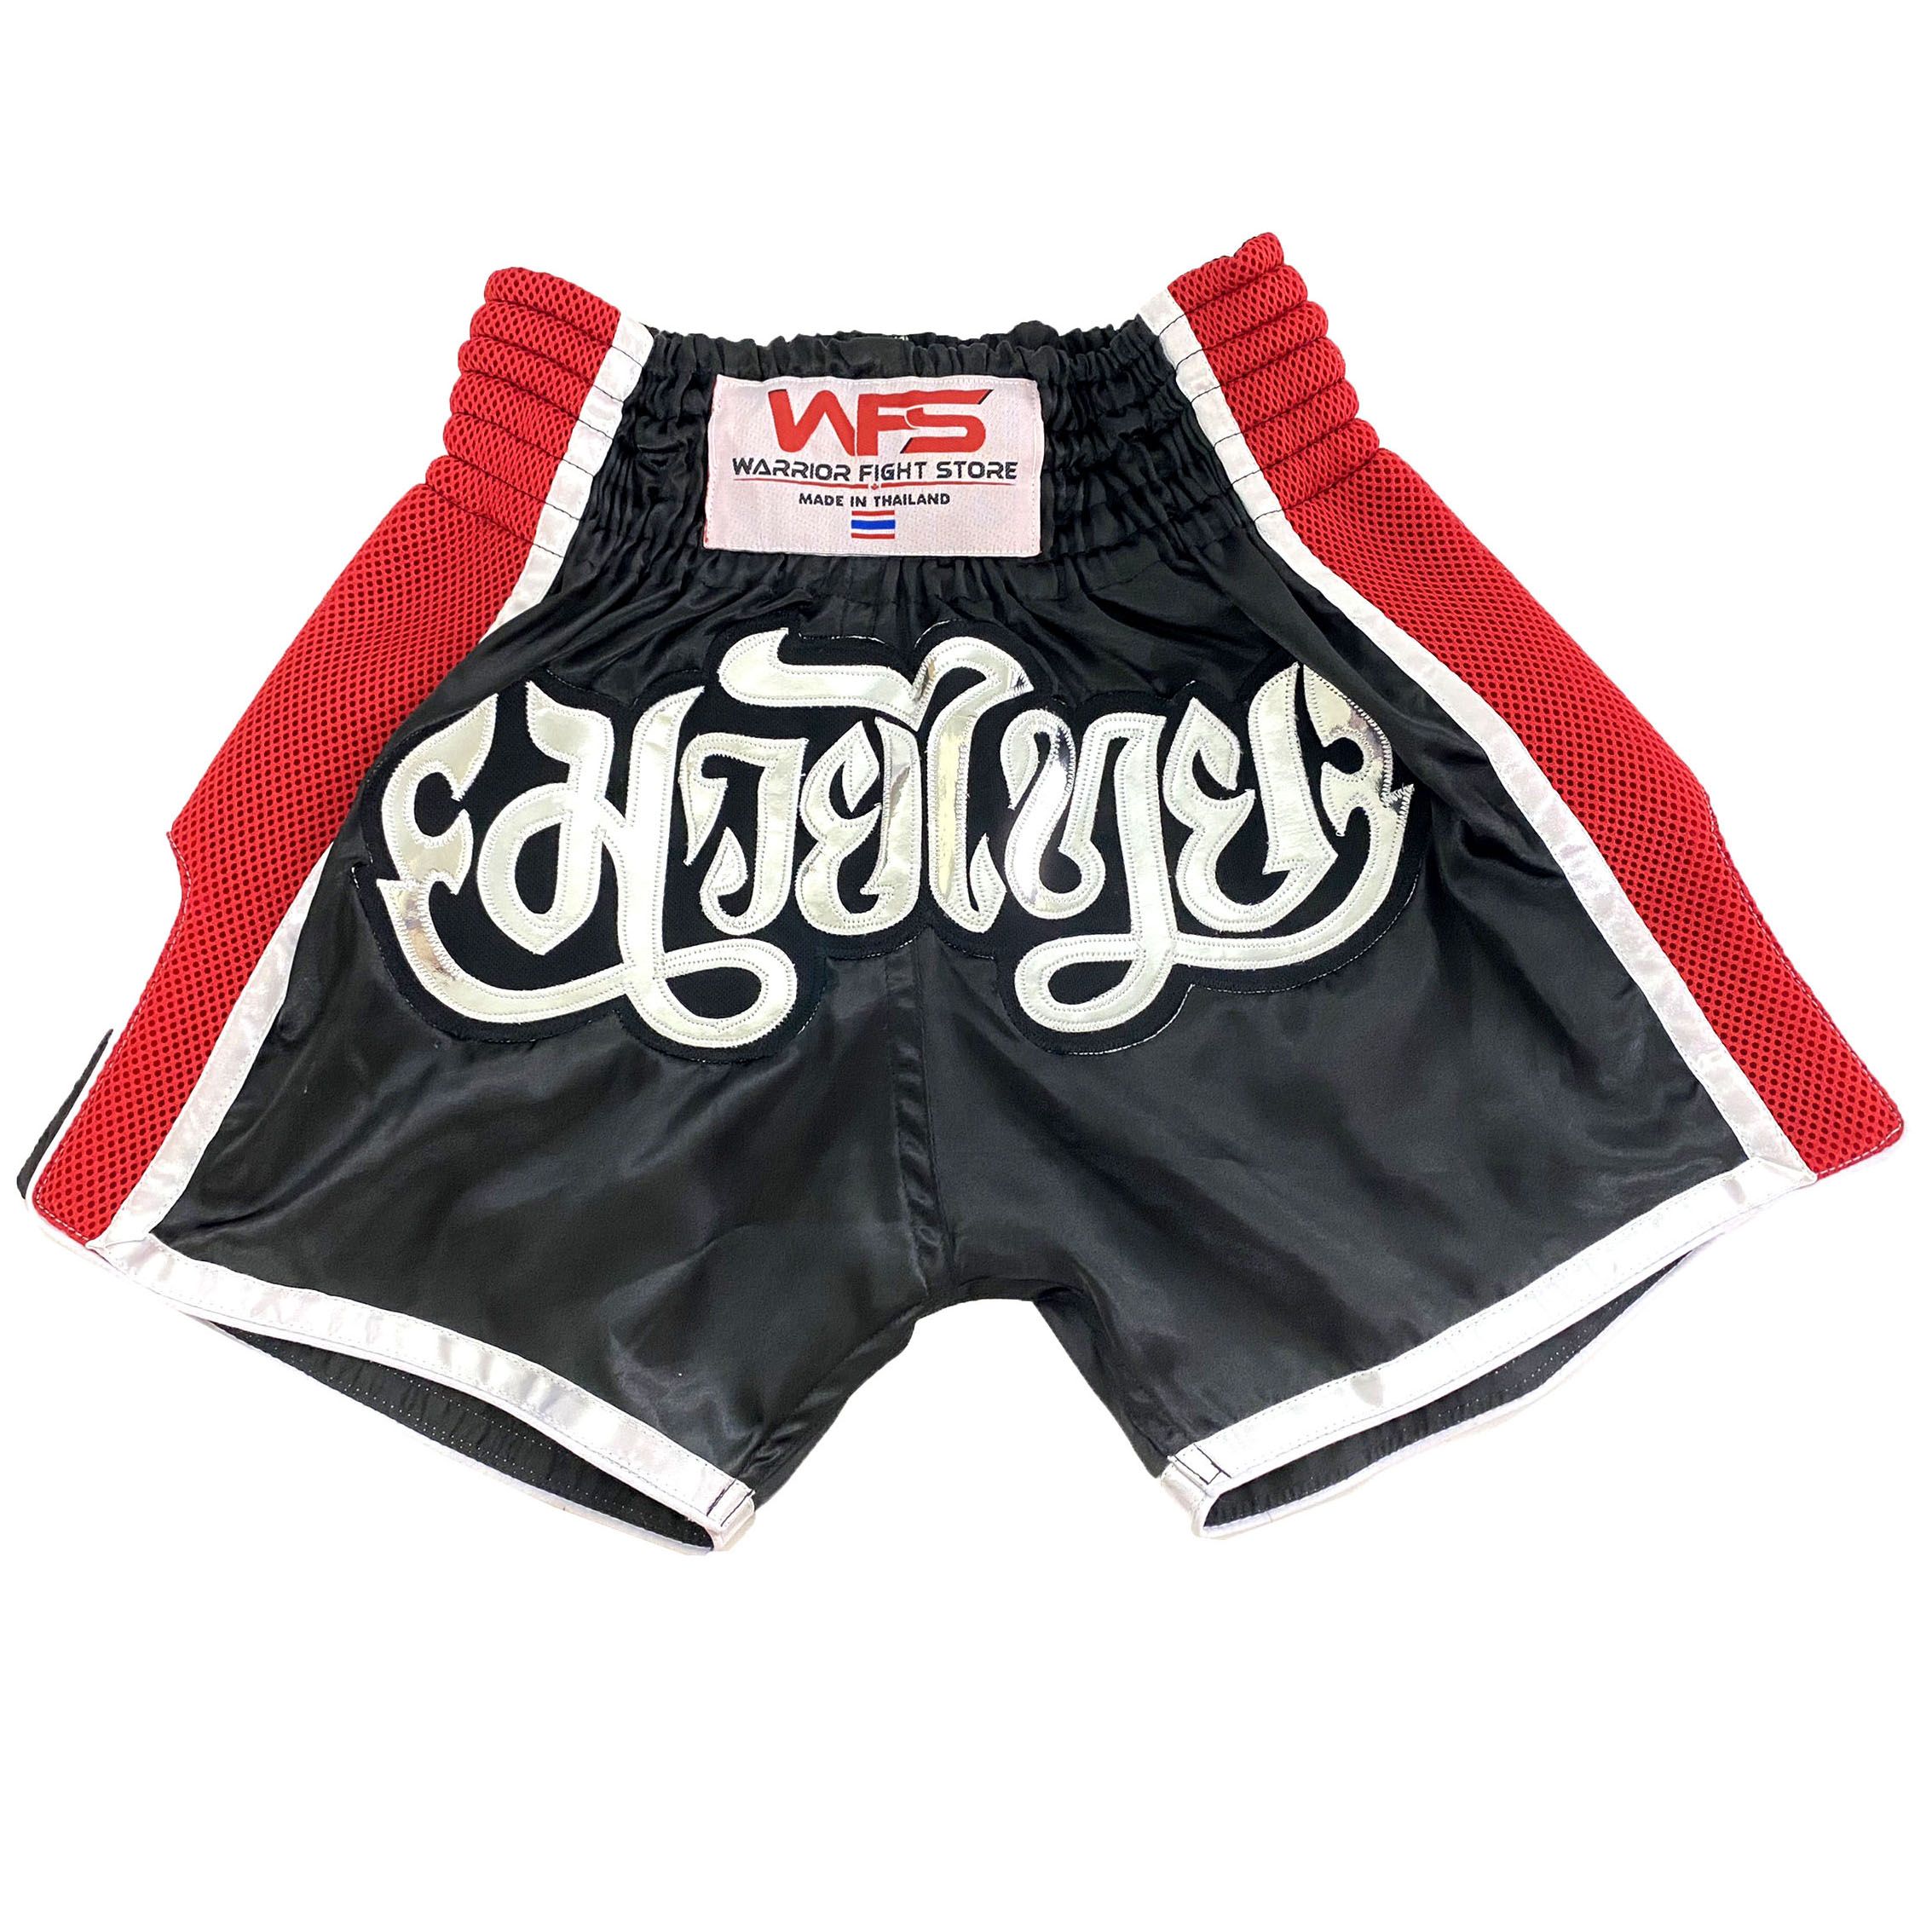 King Pro Boxing Retro Hybrid Muay Thai Shorts - Black